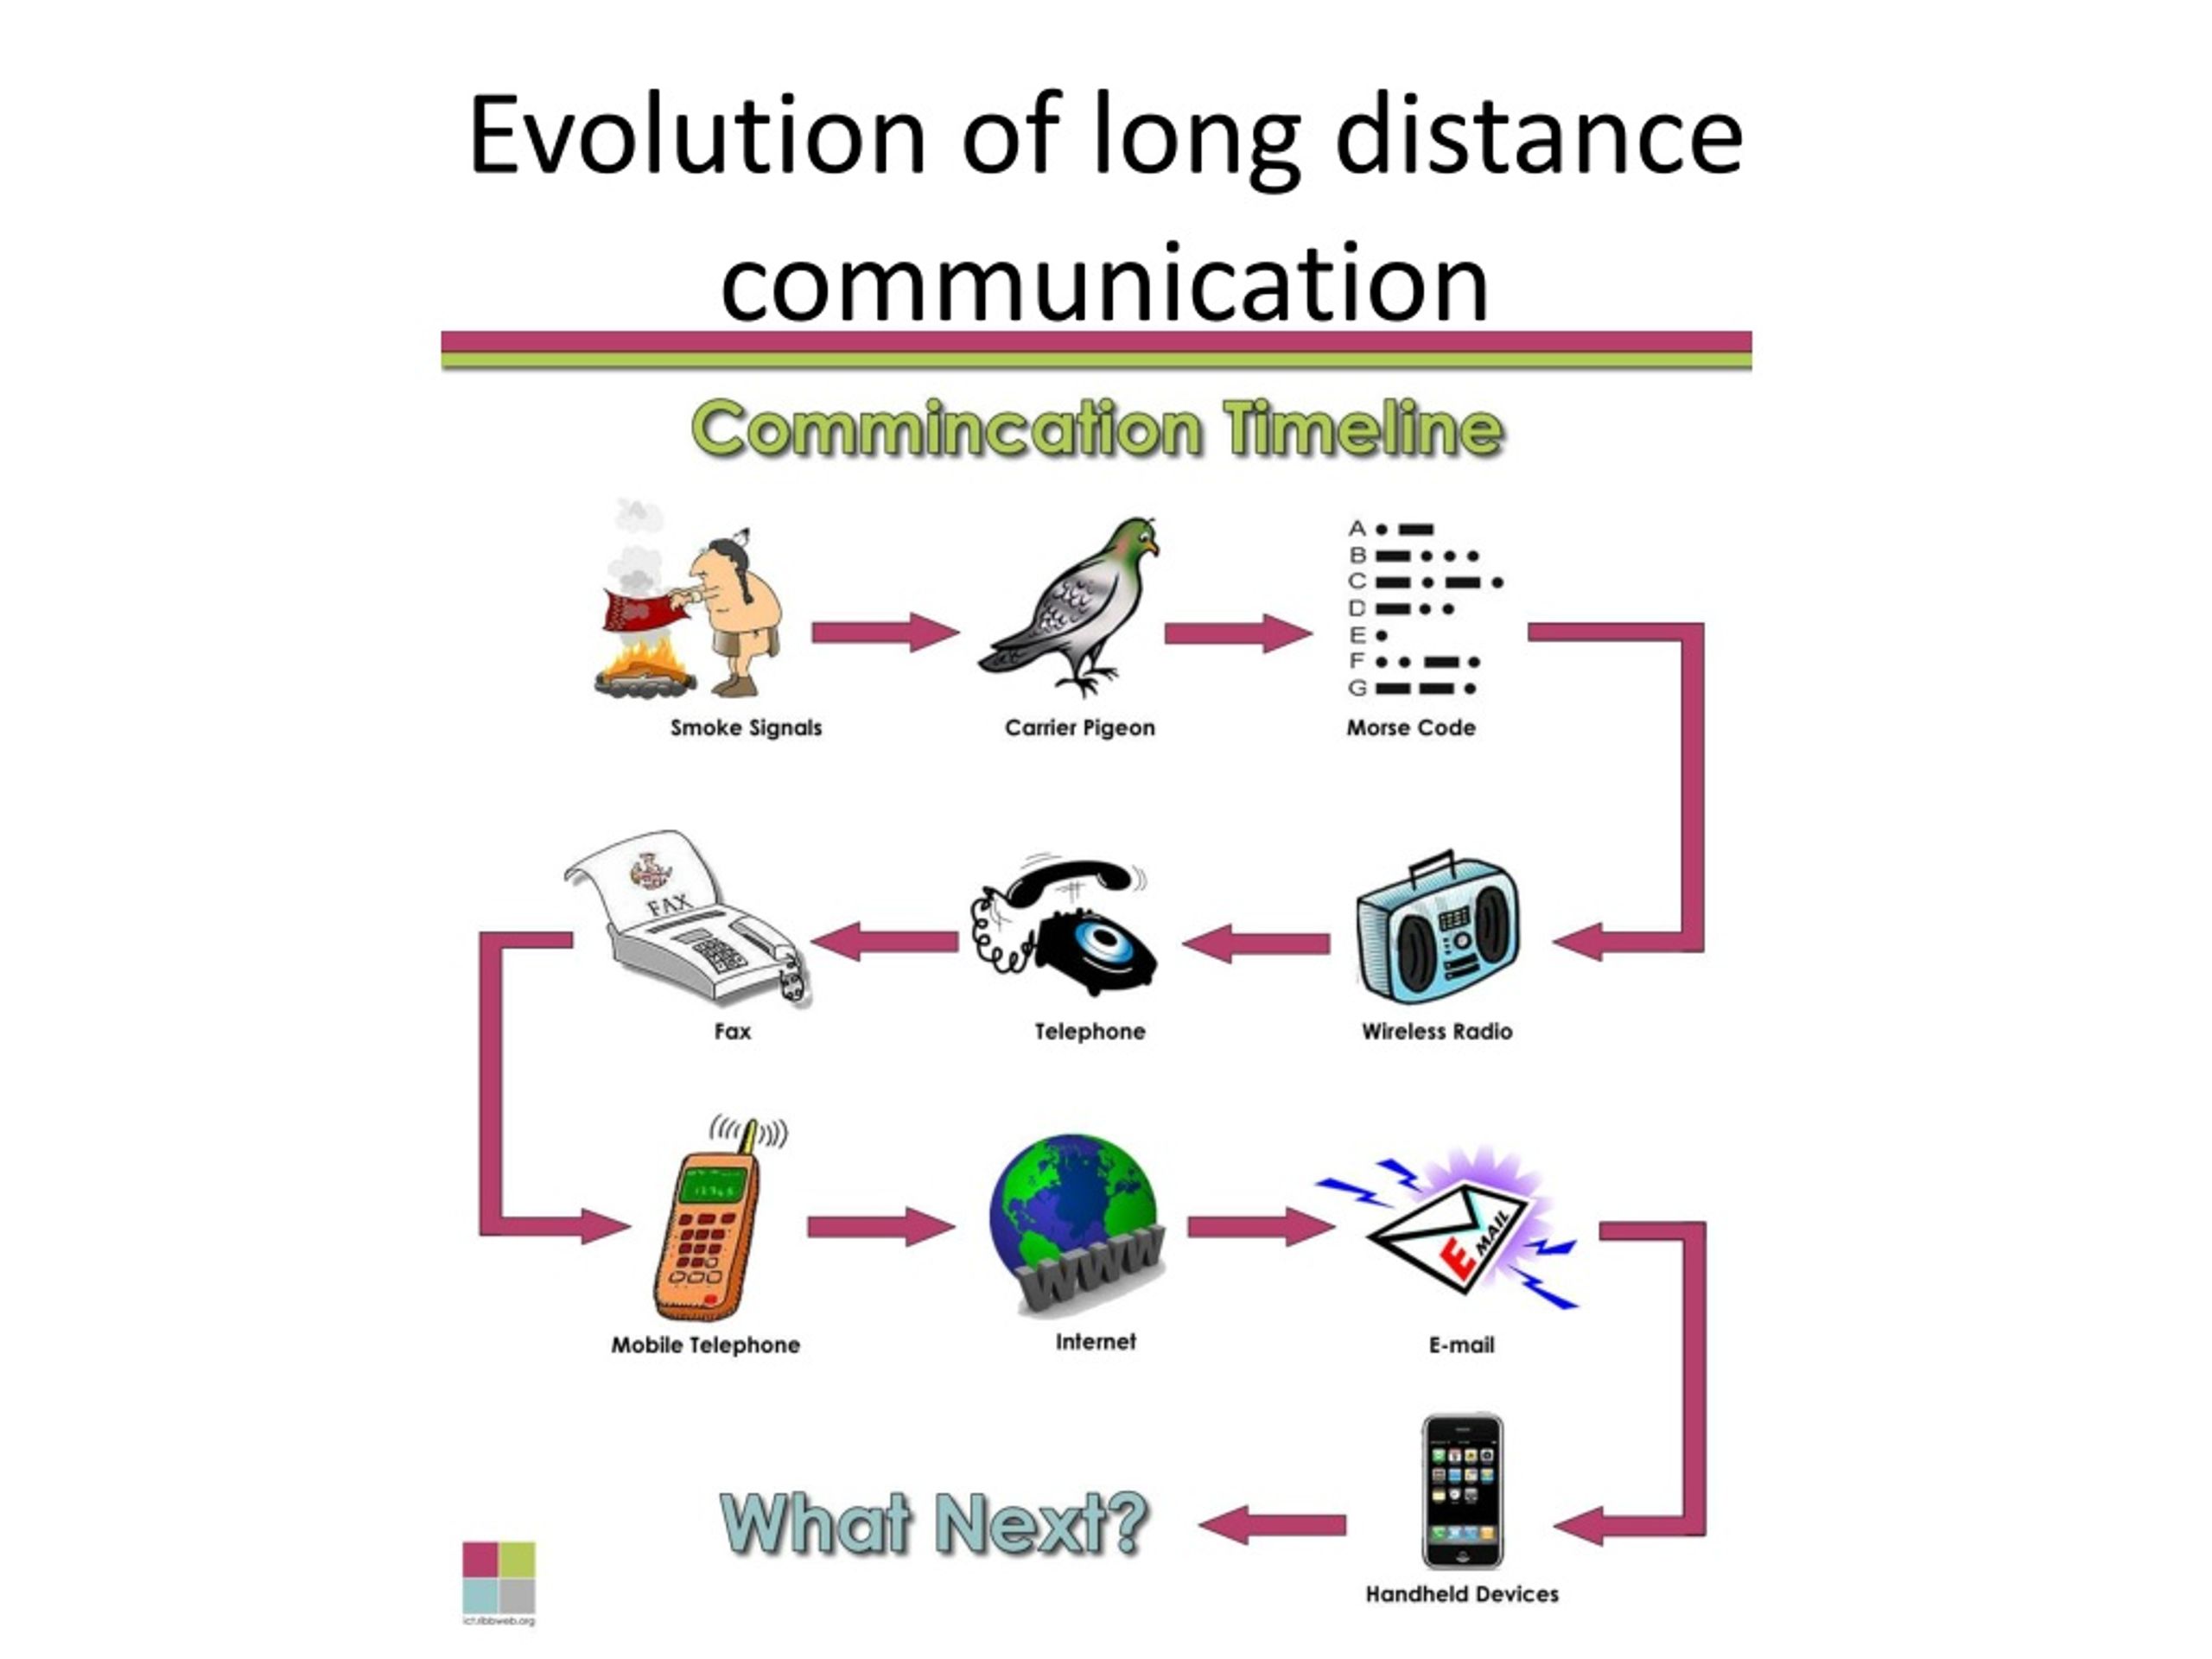 Evolution of long distance communication.